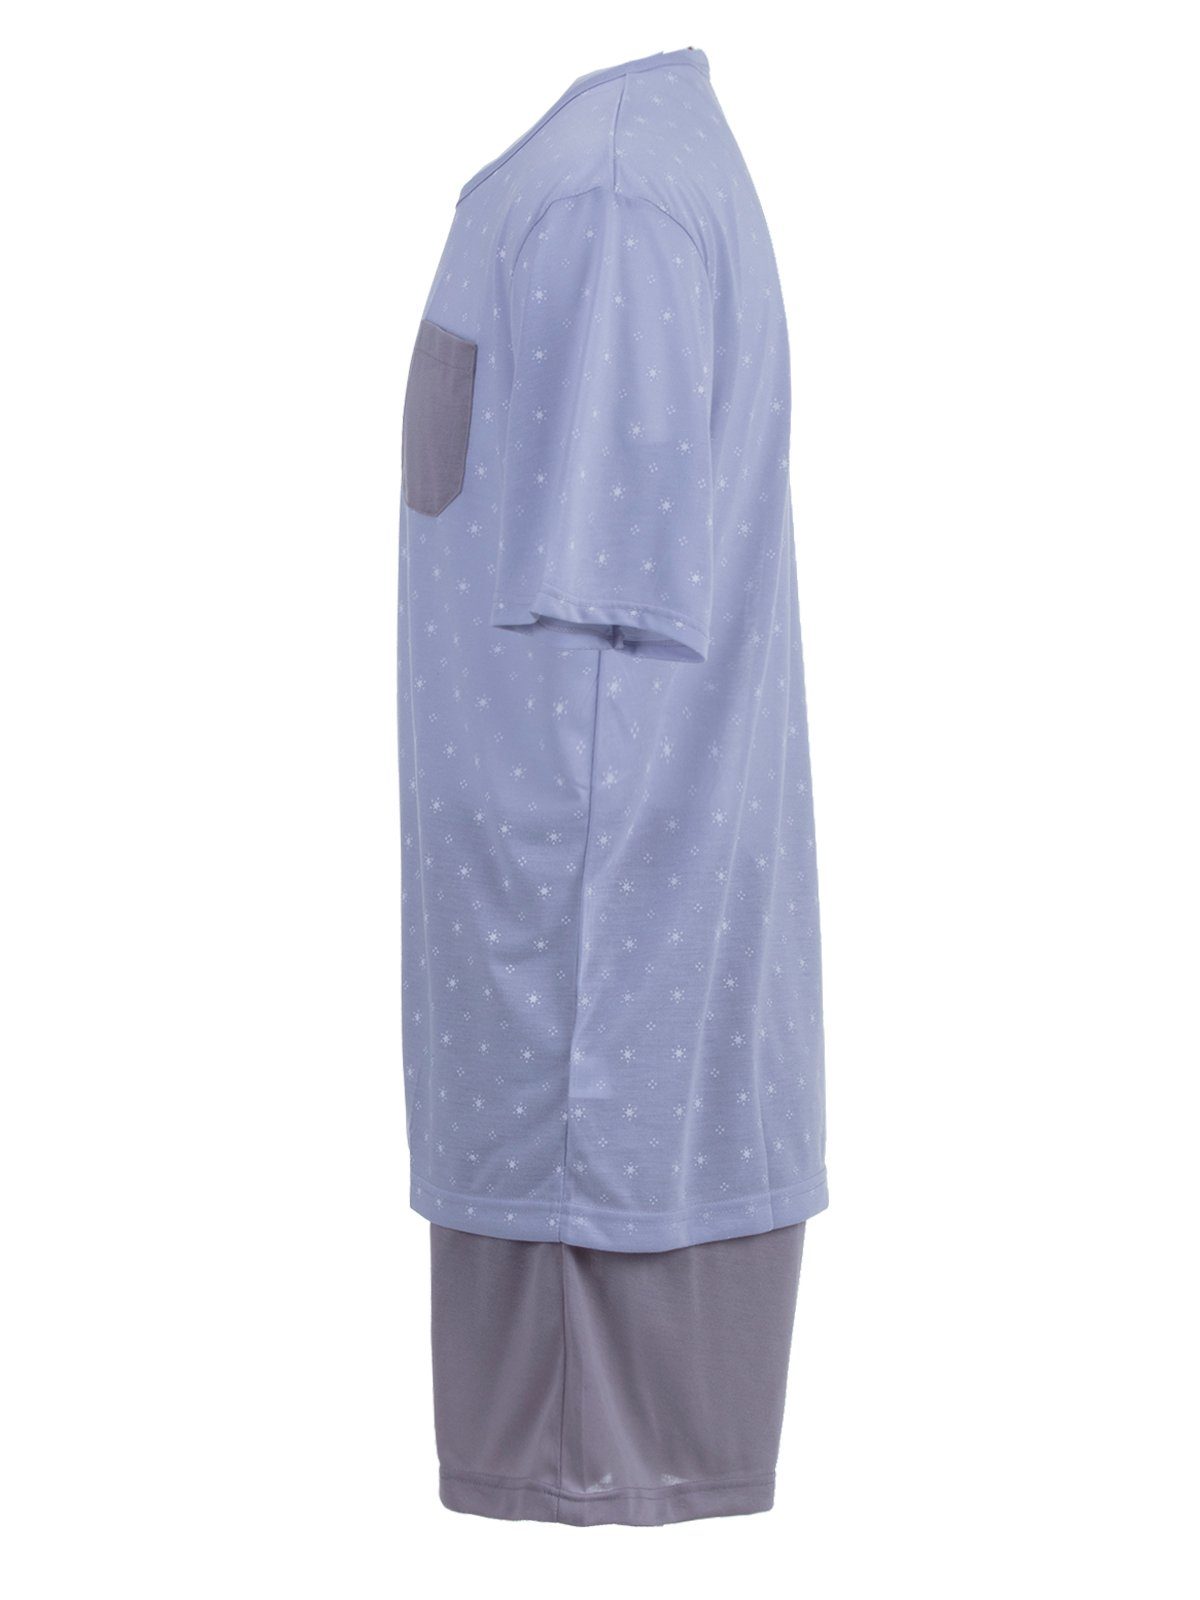 Schlafanzug Shorty grau - Tasche Set Sonne Lucky Pyjama